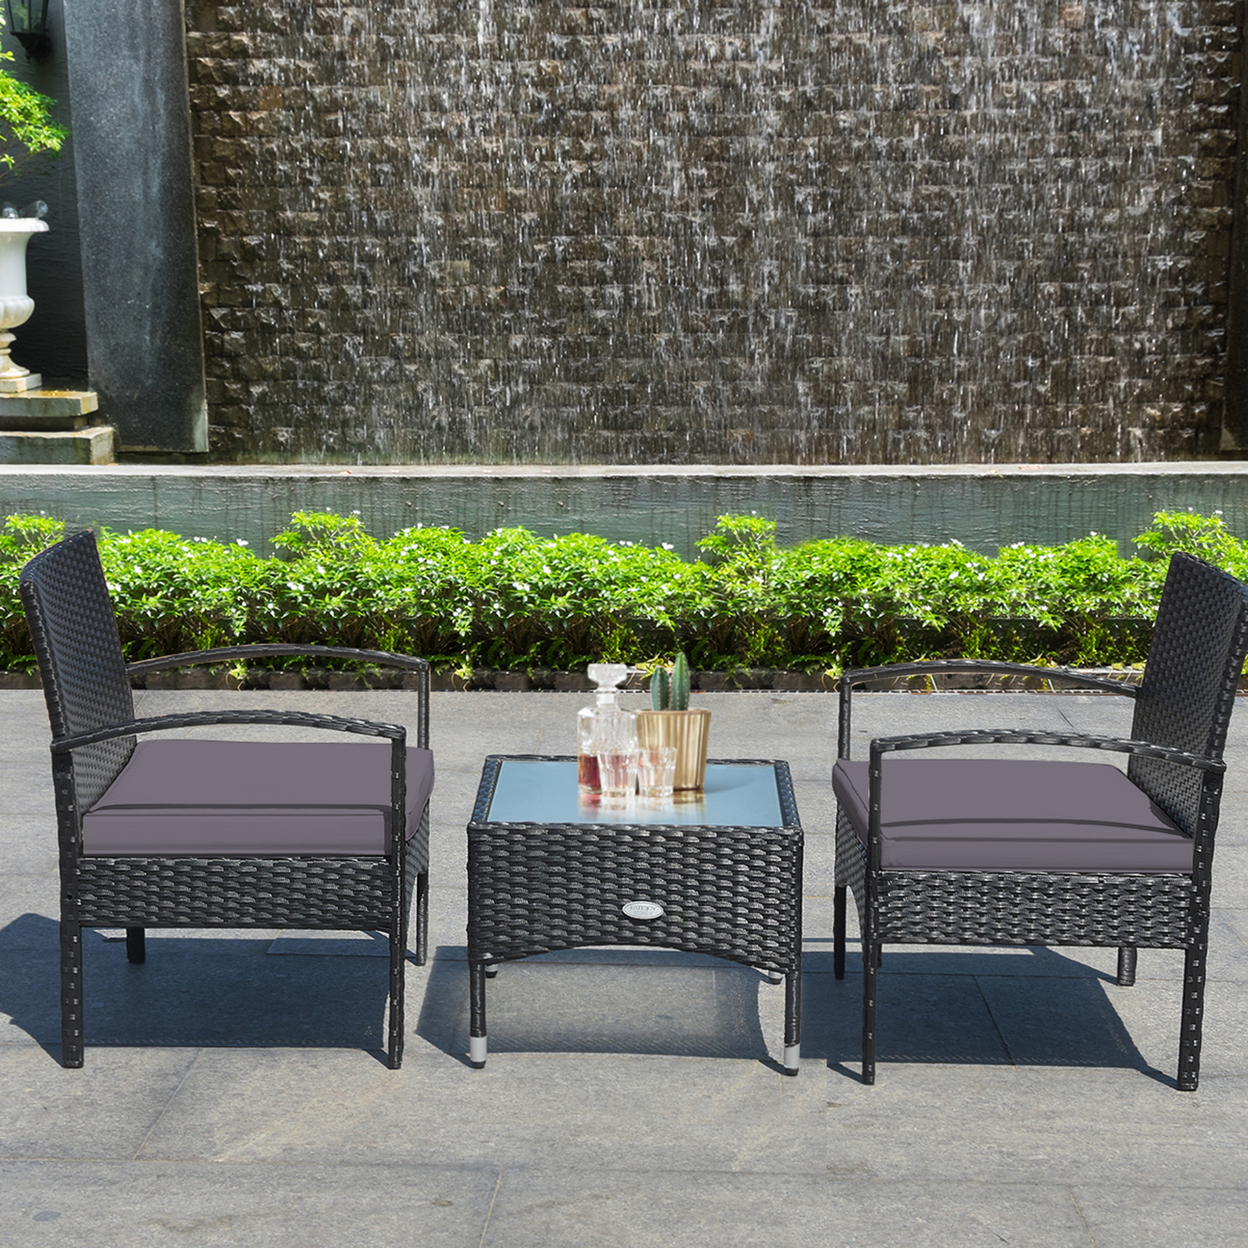 3 PCS Patio Wicker Rattan Furniture Set Coffee Table & 2 Rattan Chair W/ Cushion Grey